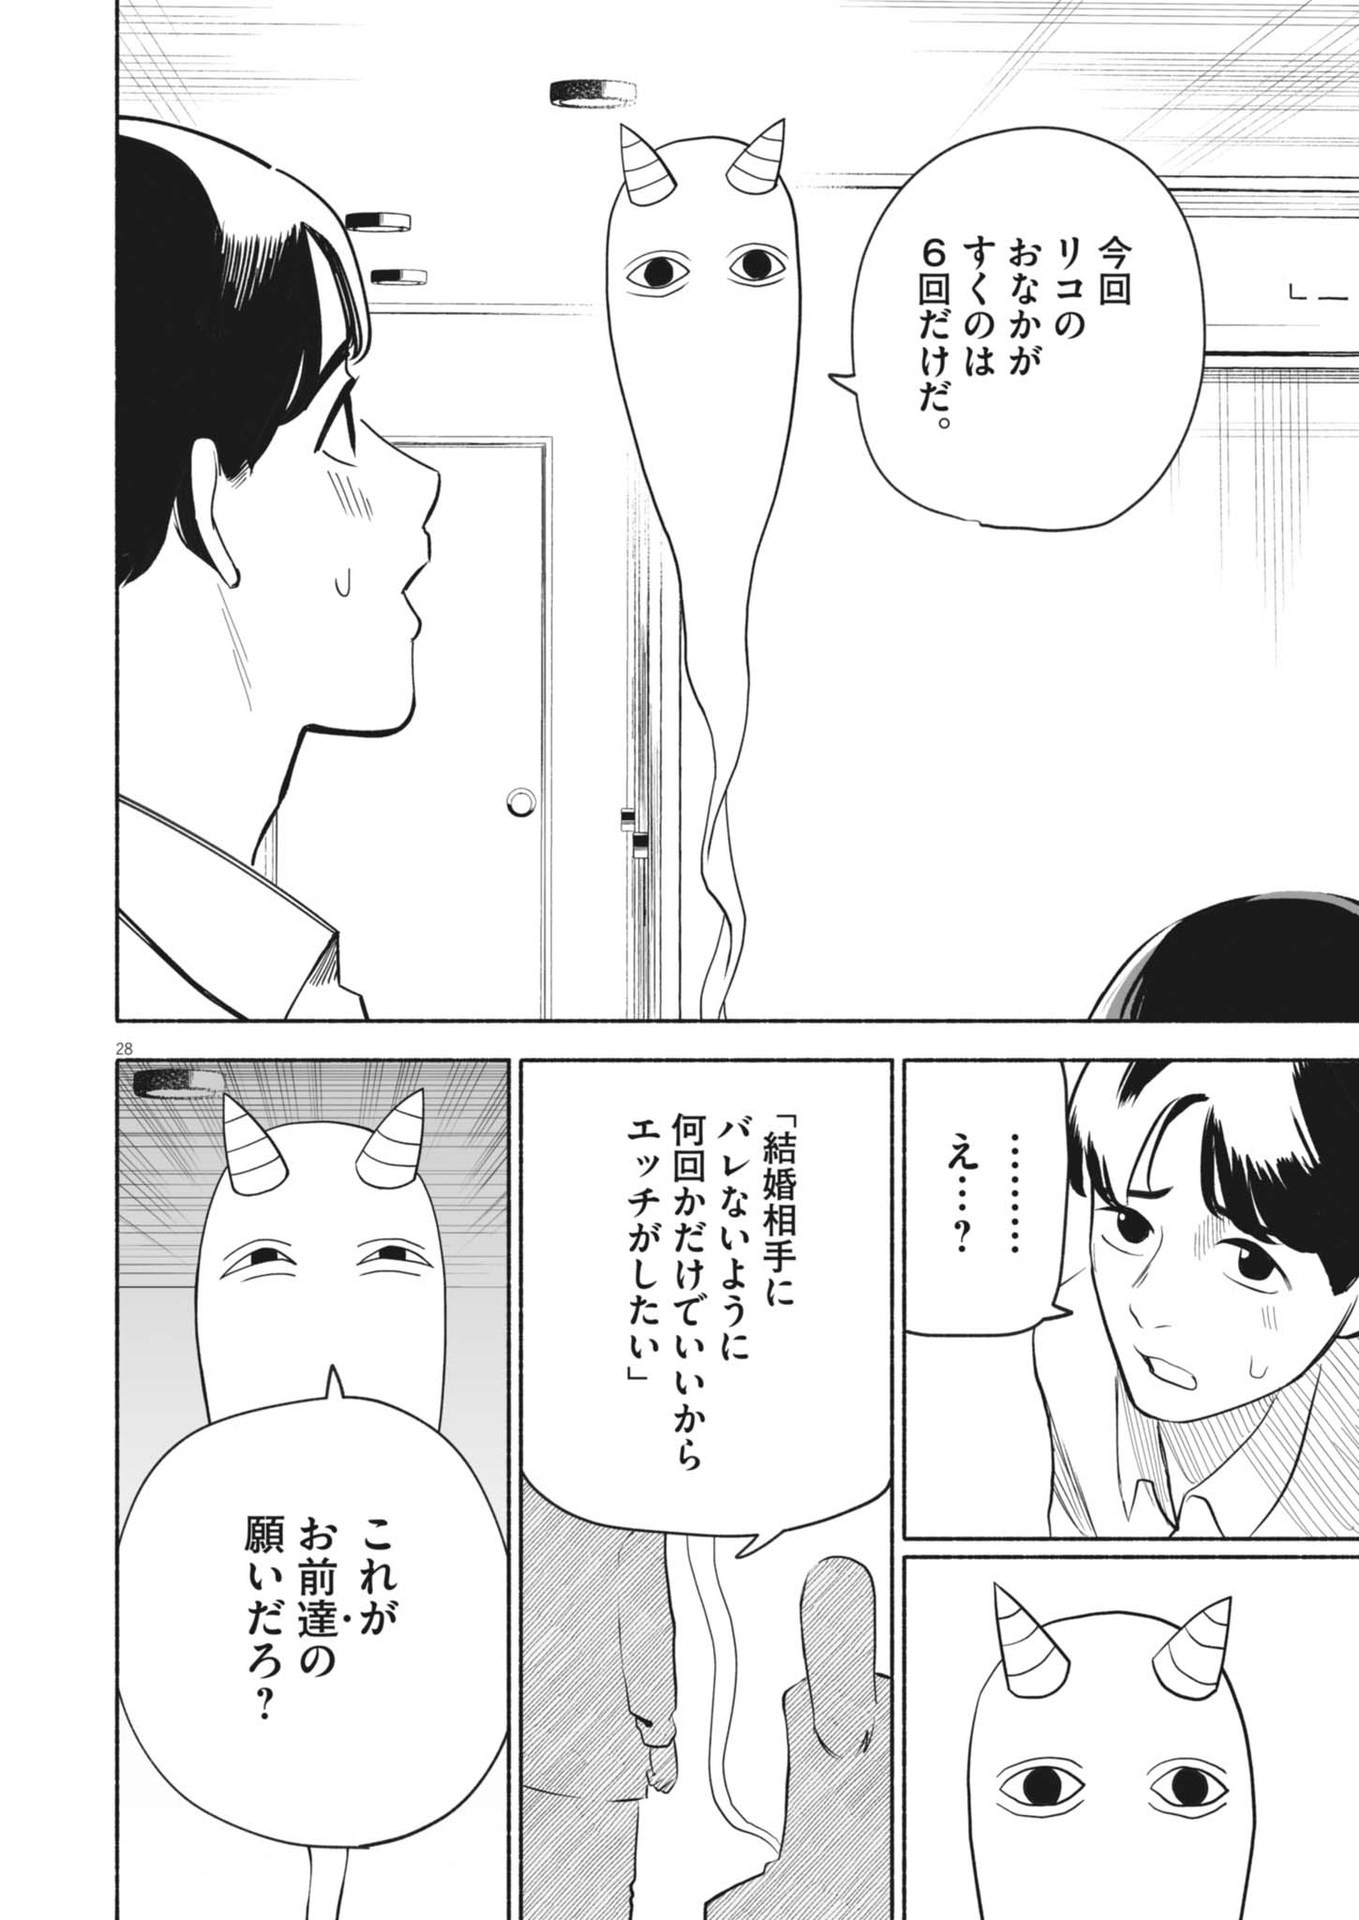 Gokuri - Chapter 3 - Page 28